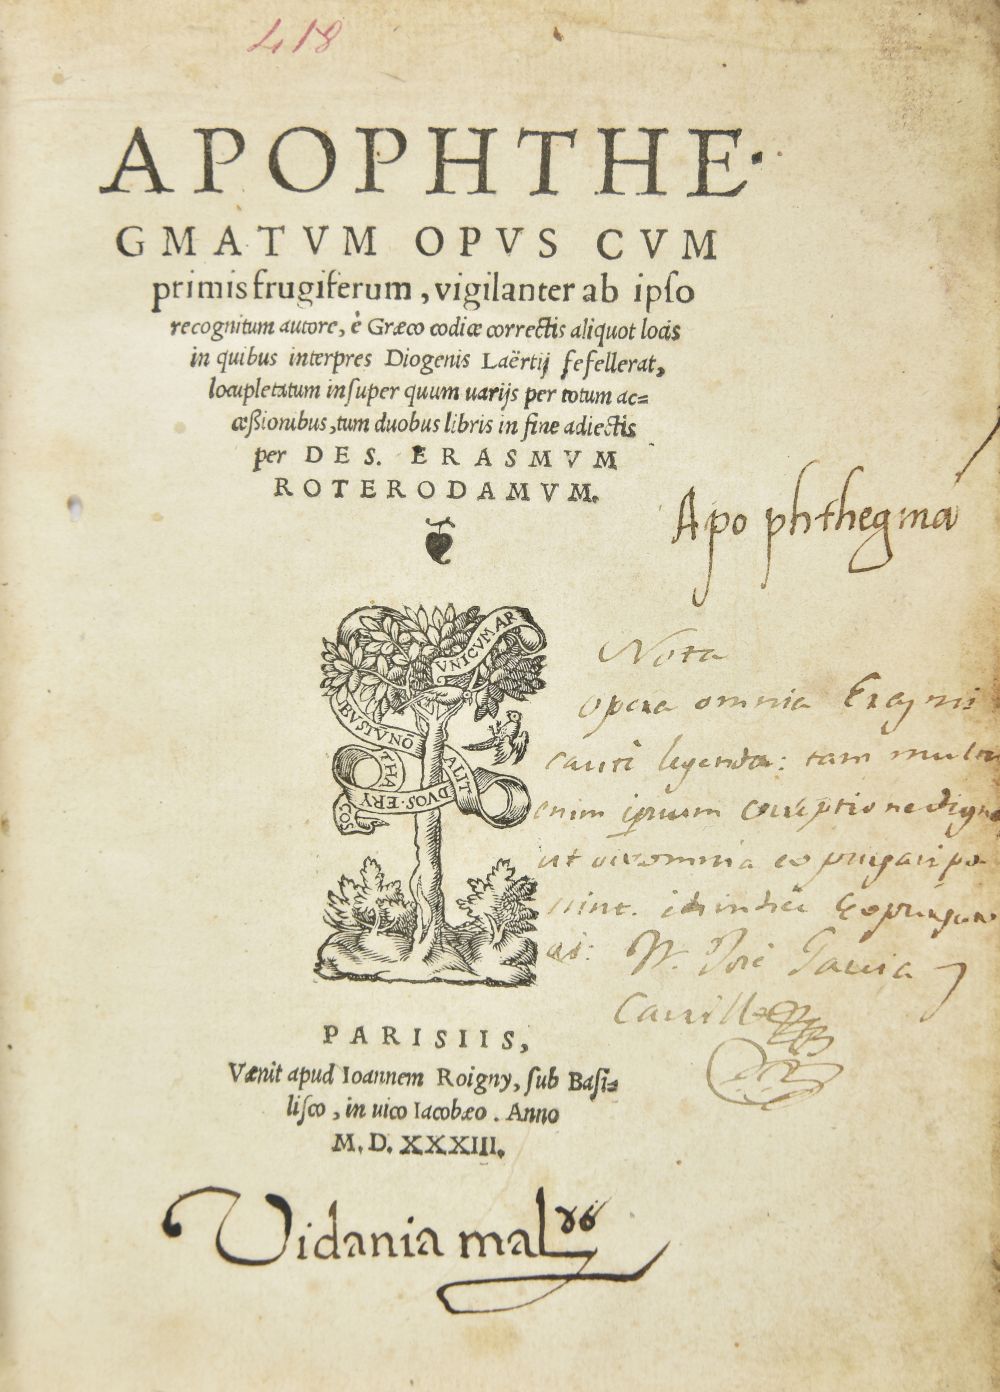 Erasmus (Desiderius). Apophthegmatum, Paris, 1533, [bound with:] Plutarch, Apophthegmata, c.1525